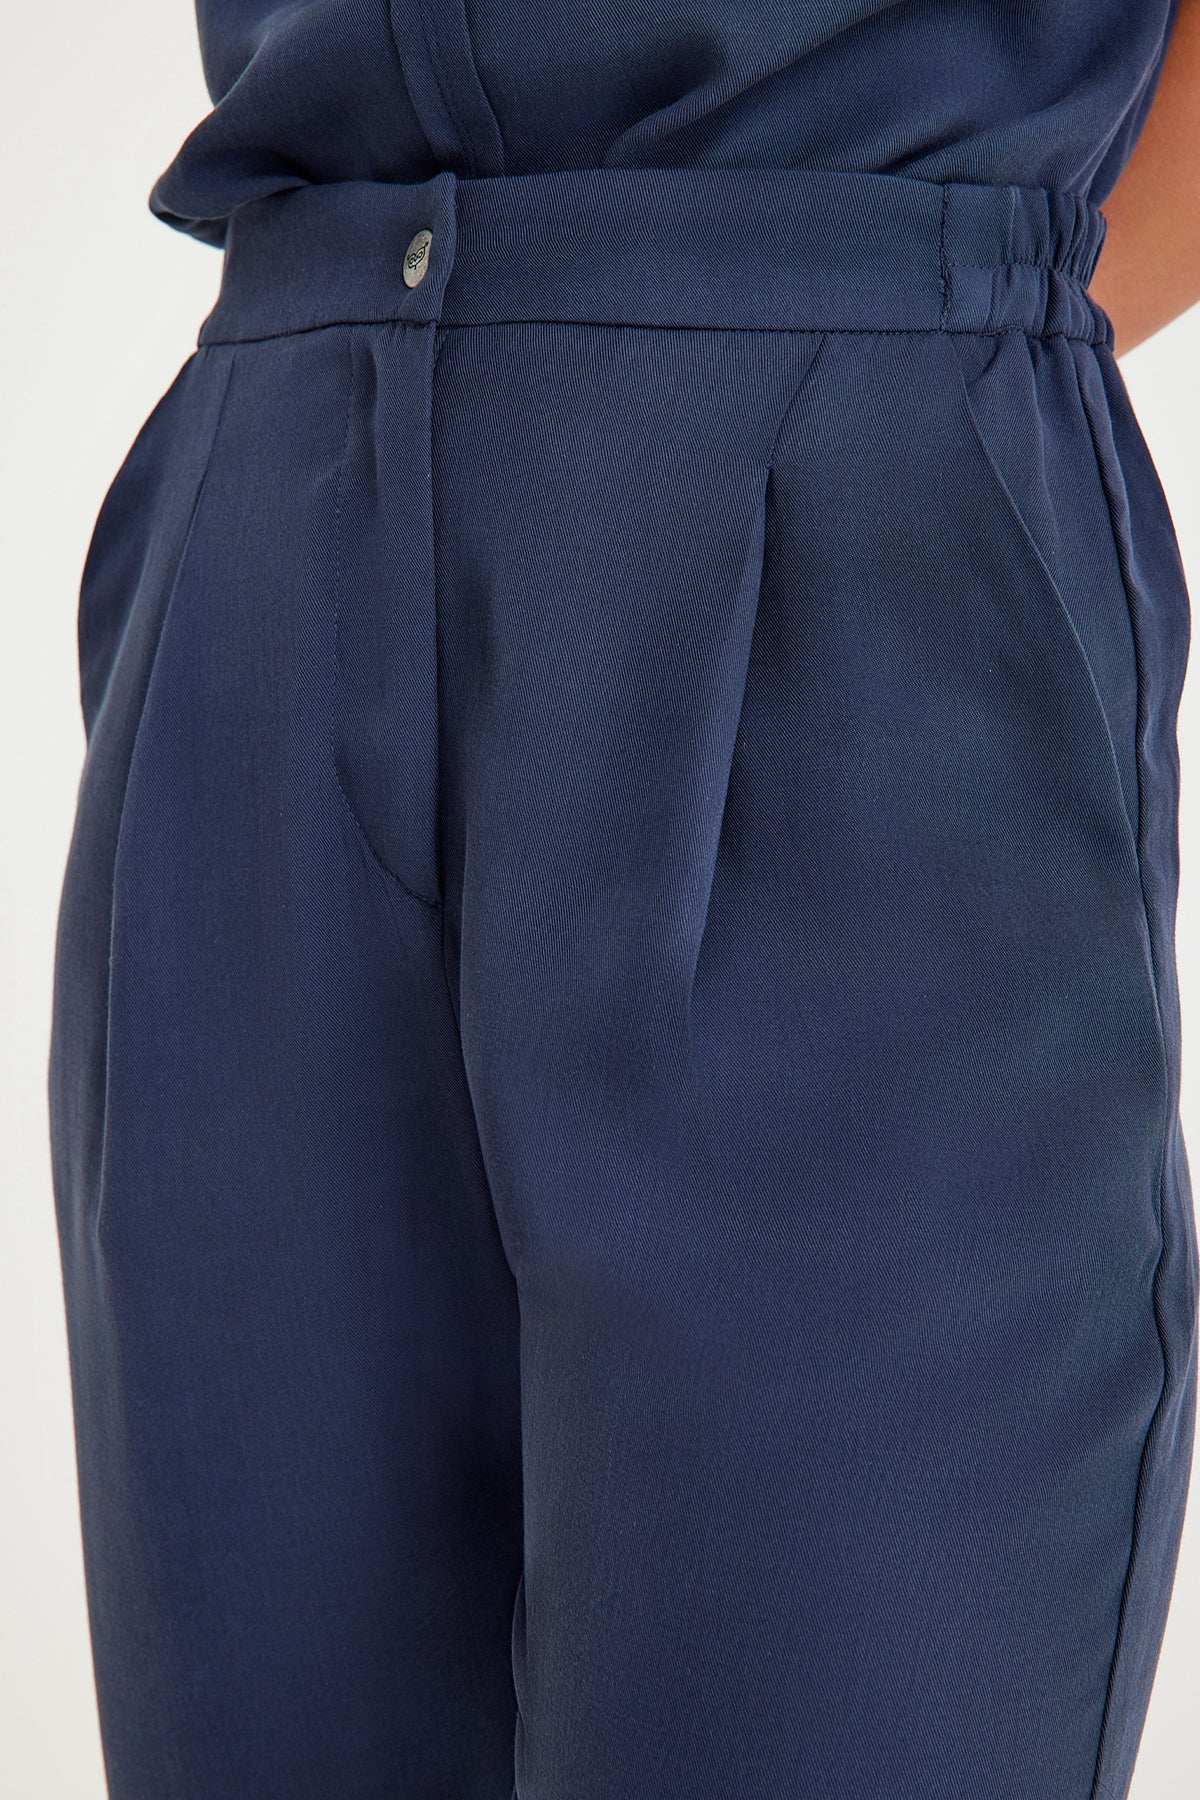 Navy Blue Women's Carrot Trousers